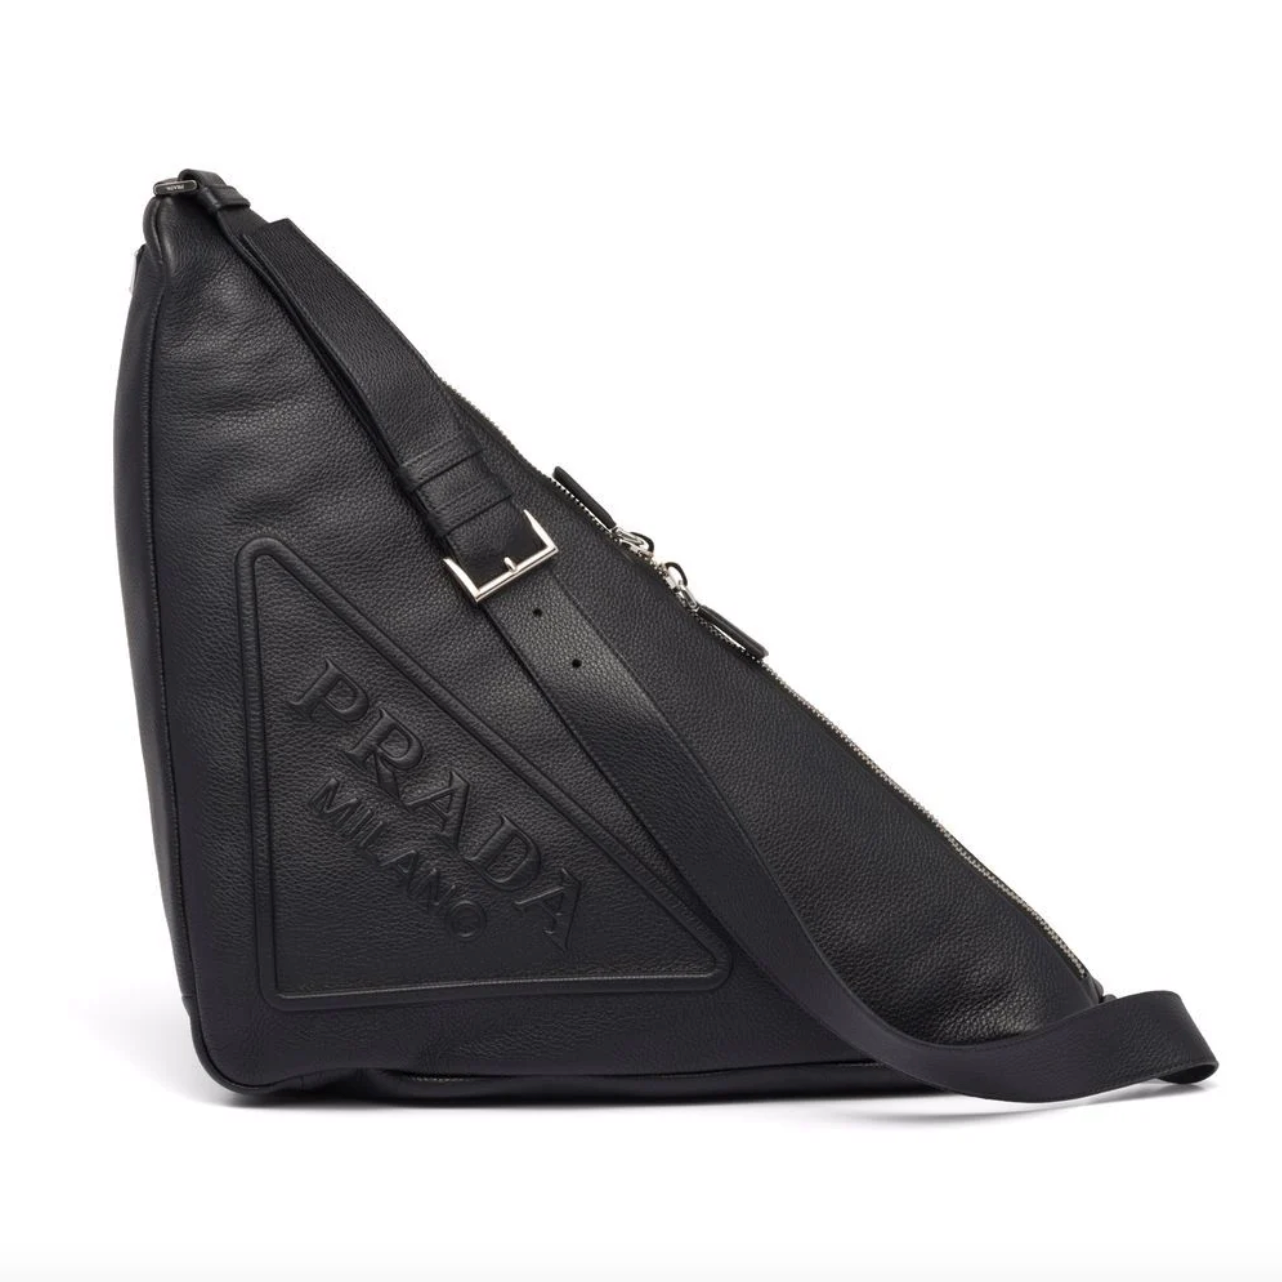 Prada Handbag Black Nylon/Leather Medium Messenger Shoulder Bag